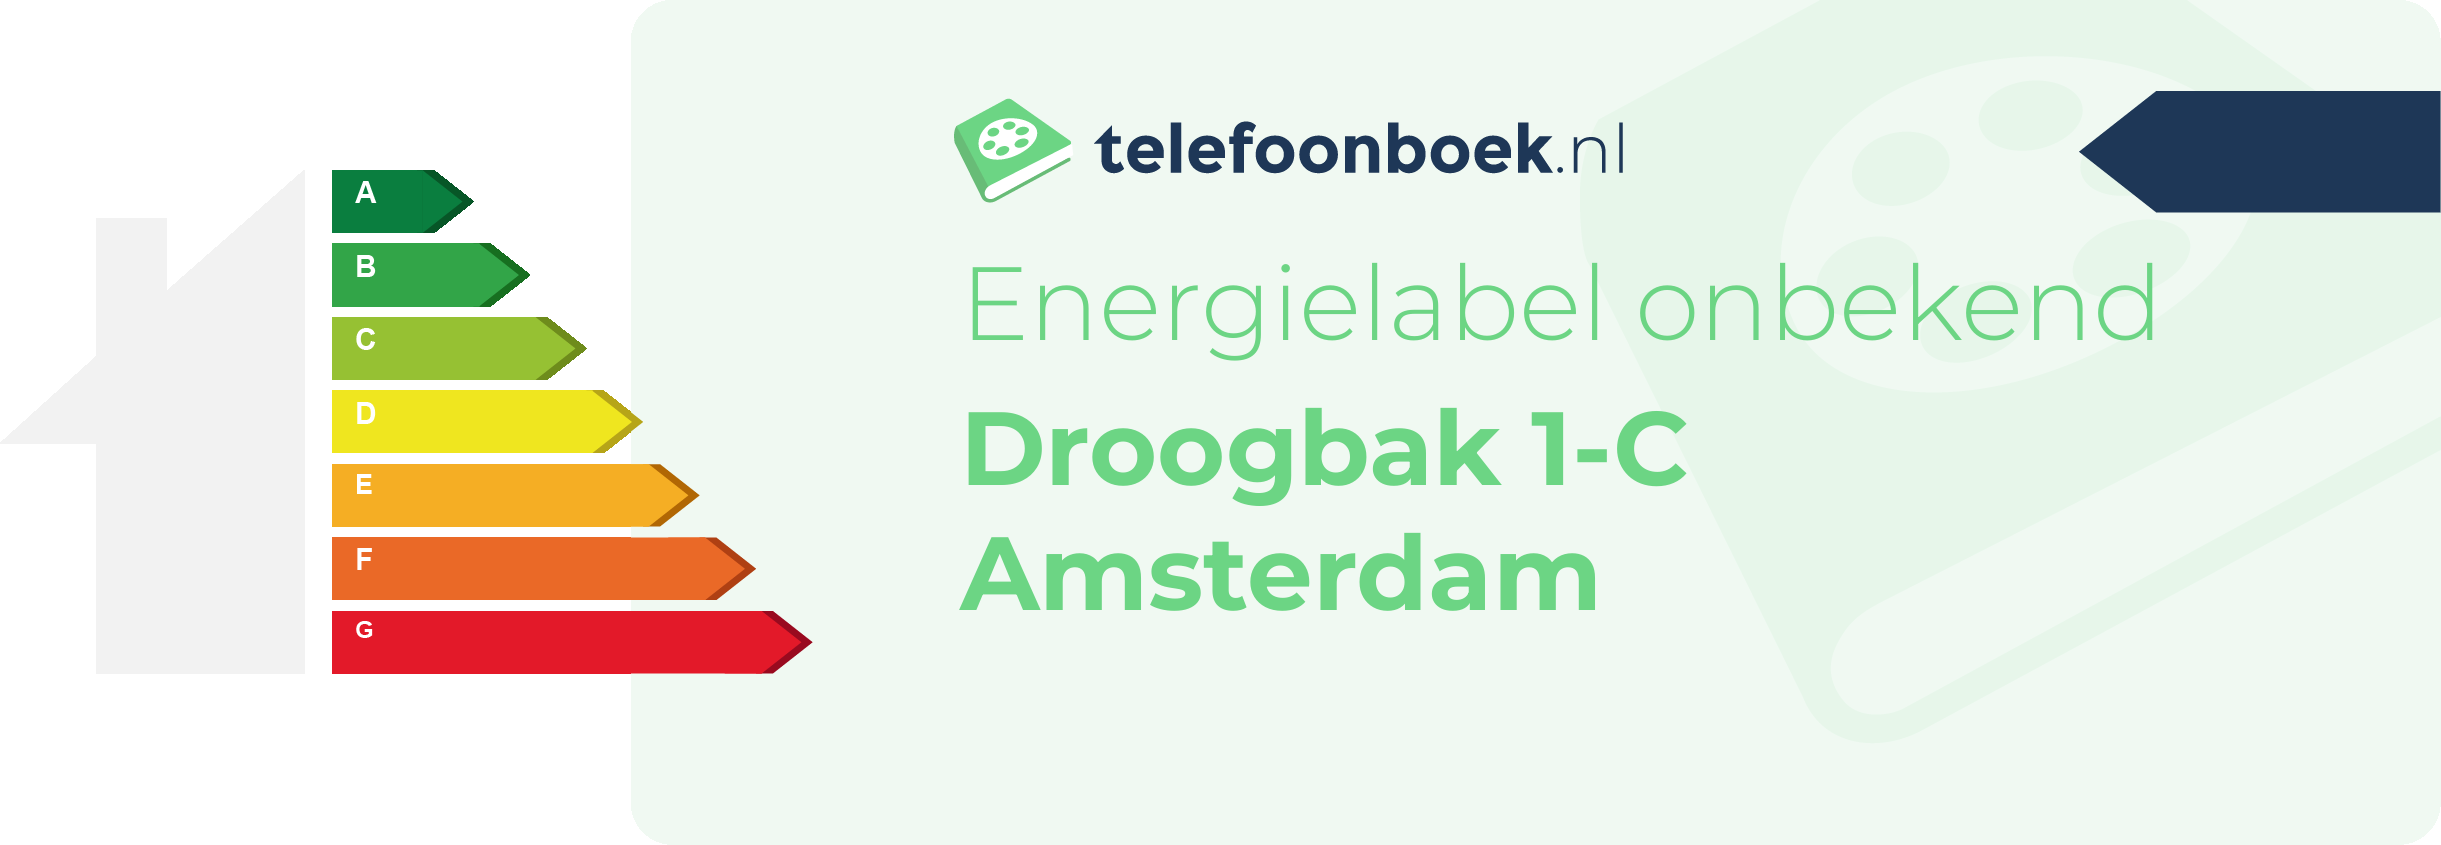 Energielabel Droogbak 1-C Amsterdam